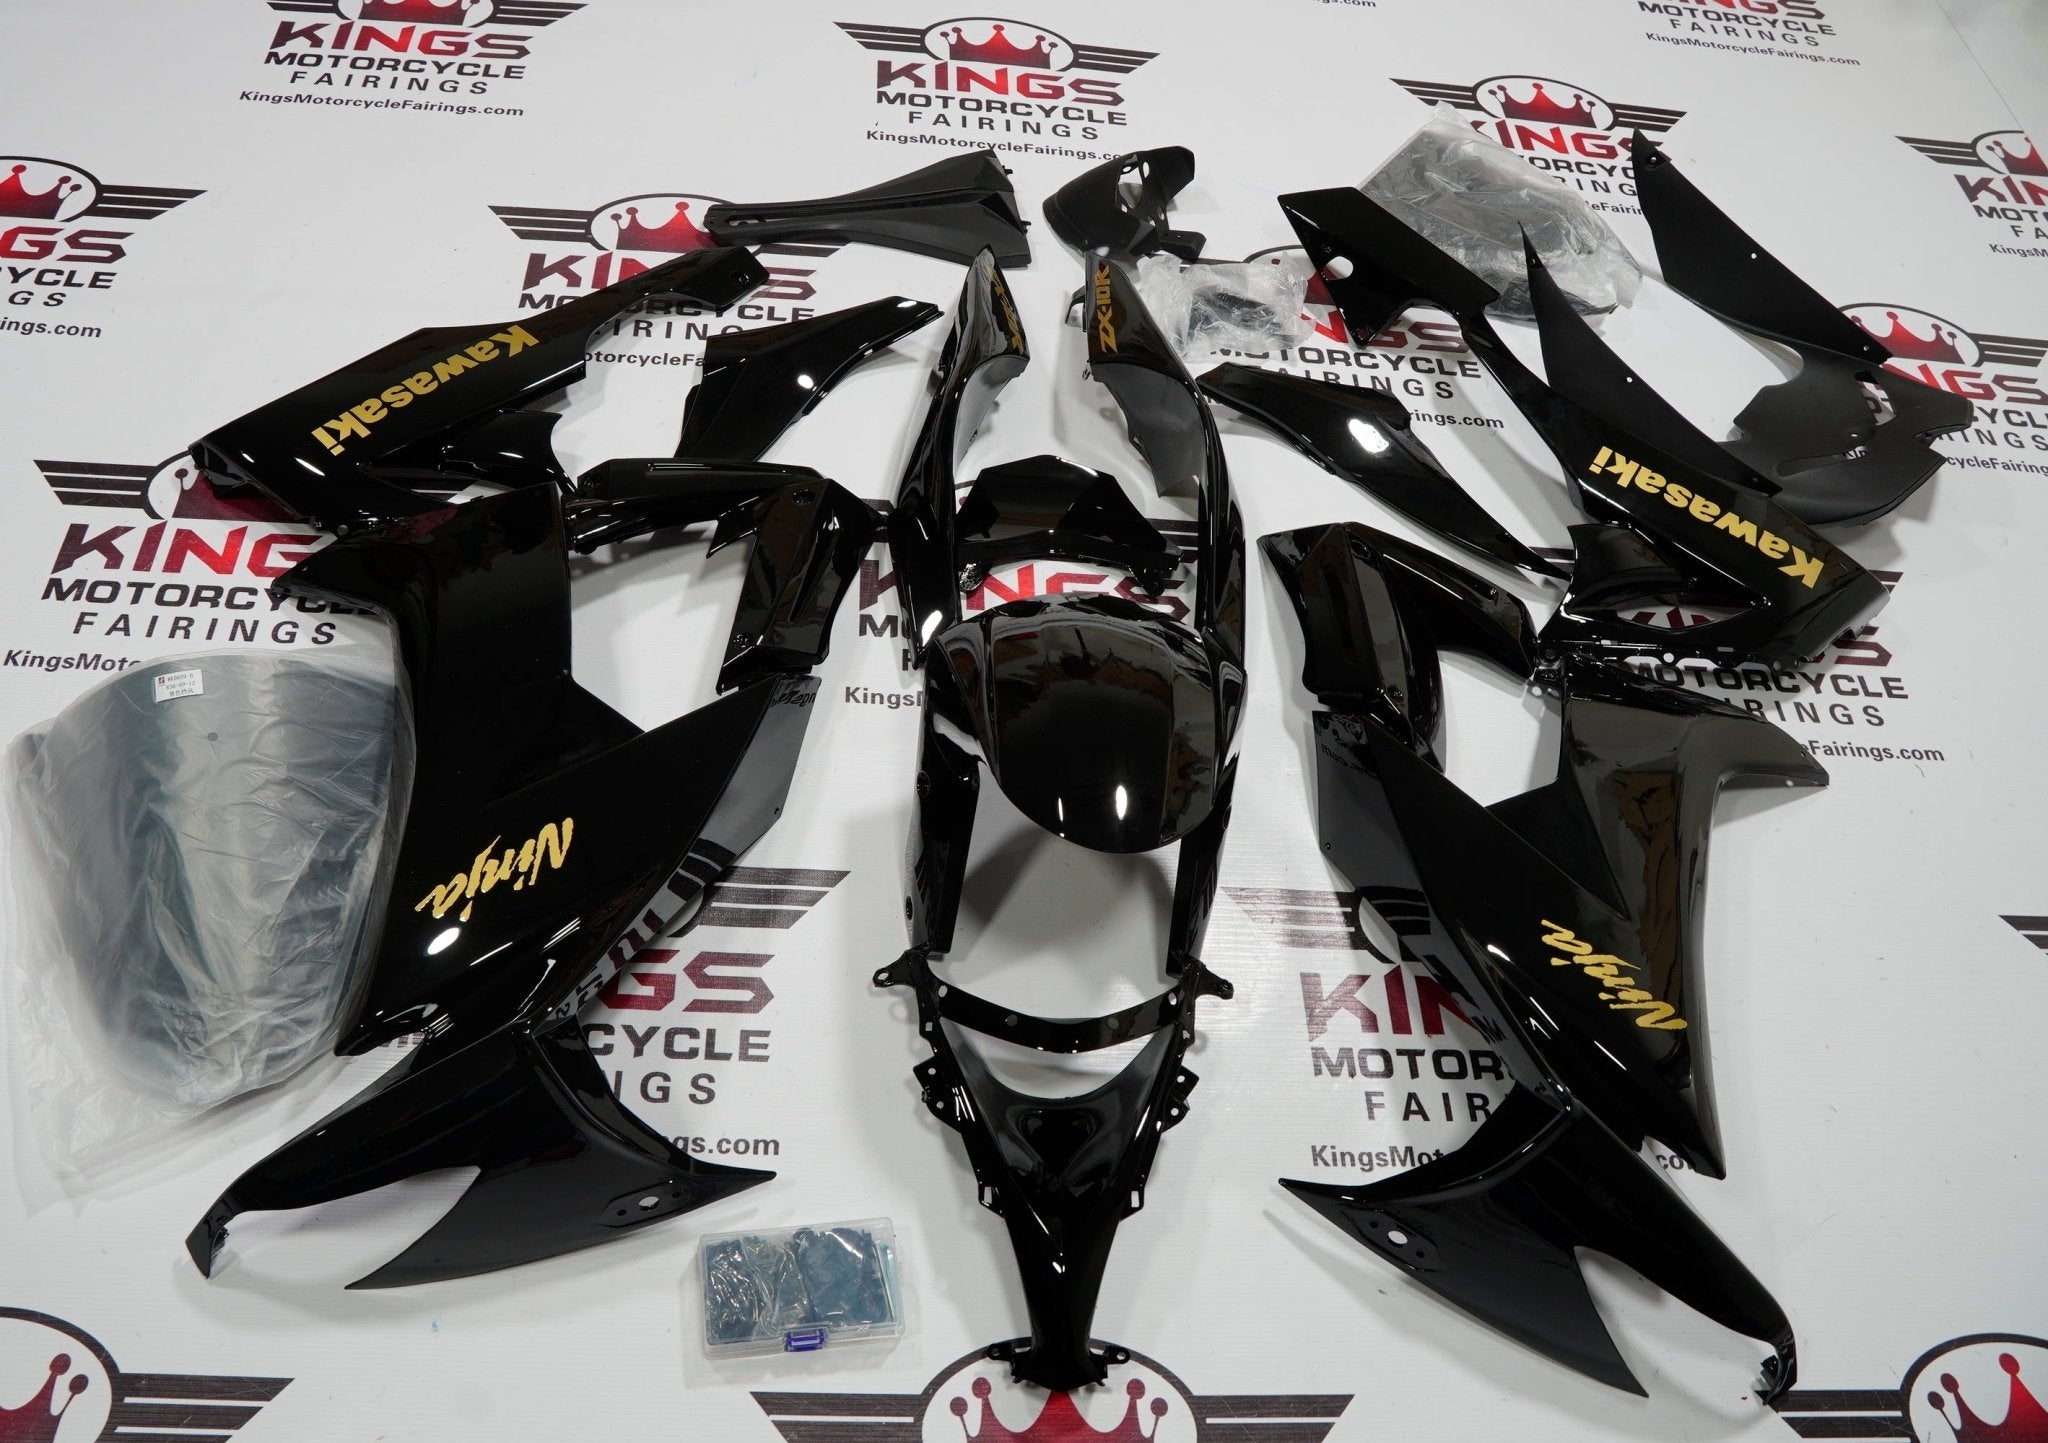 Fairings | Kawasaki Ninja ZX10R (2008-2010) Black, Gold